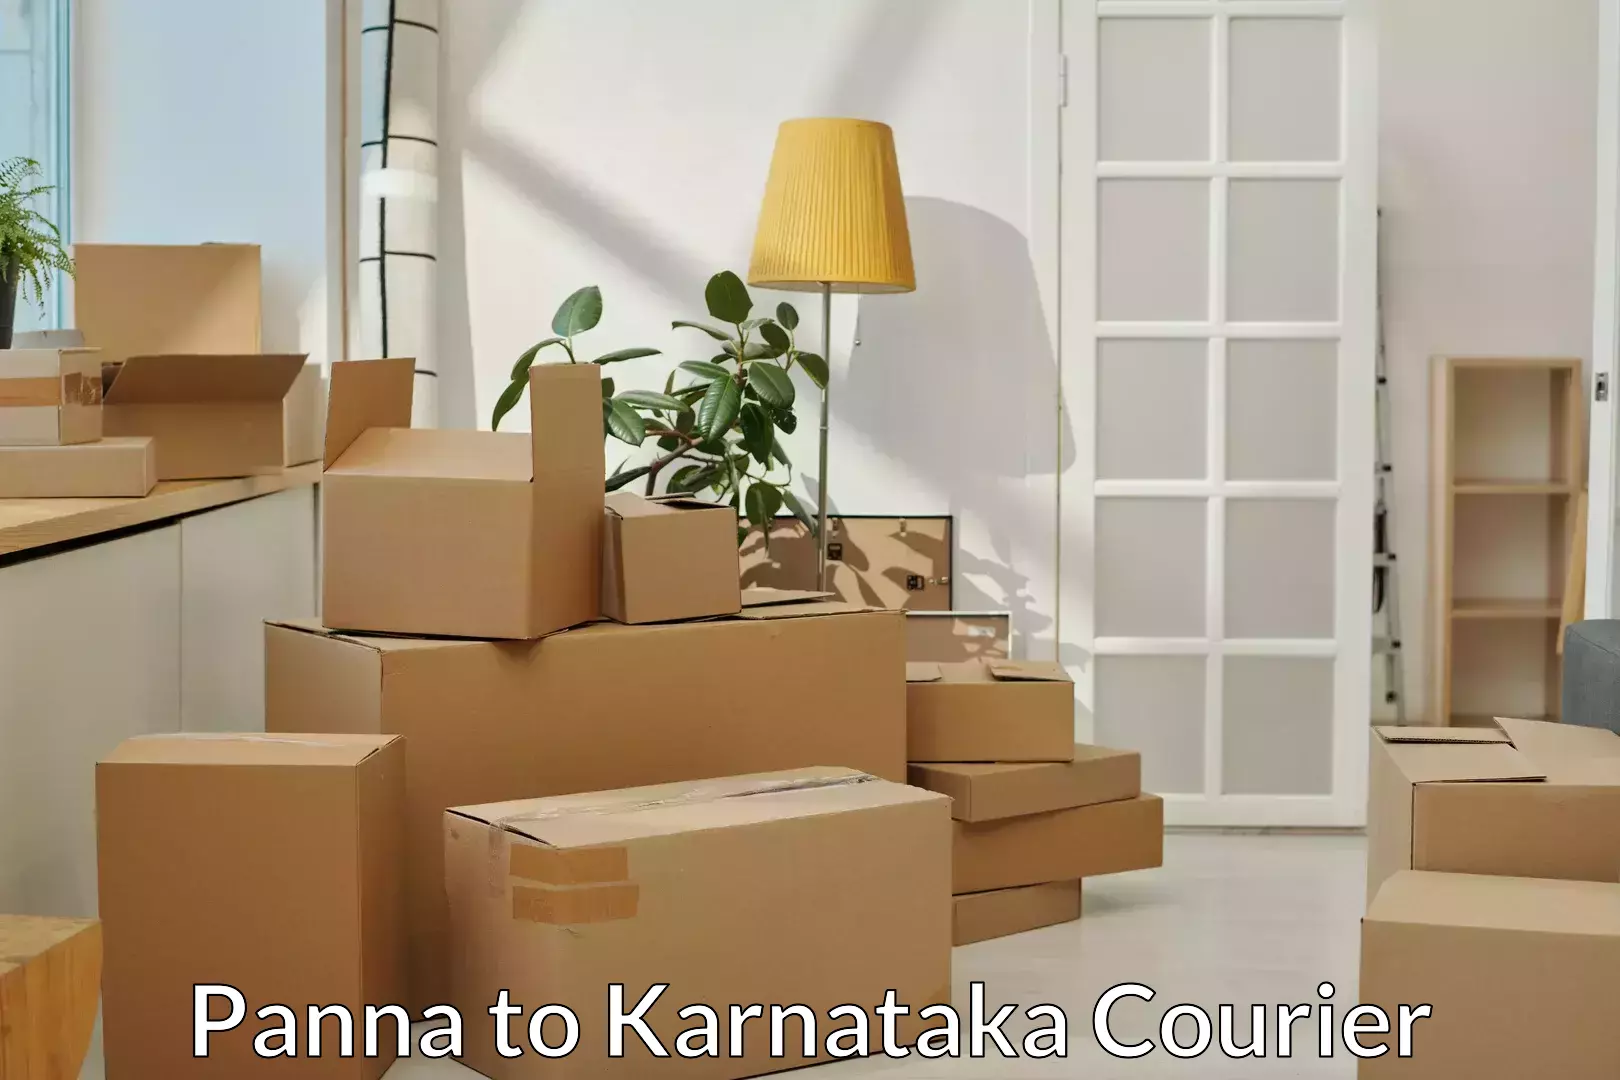 Professional moving company Panna to Karnataka